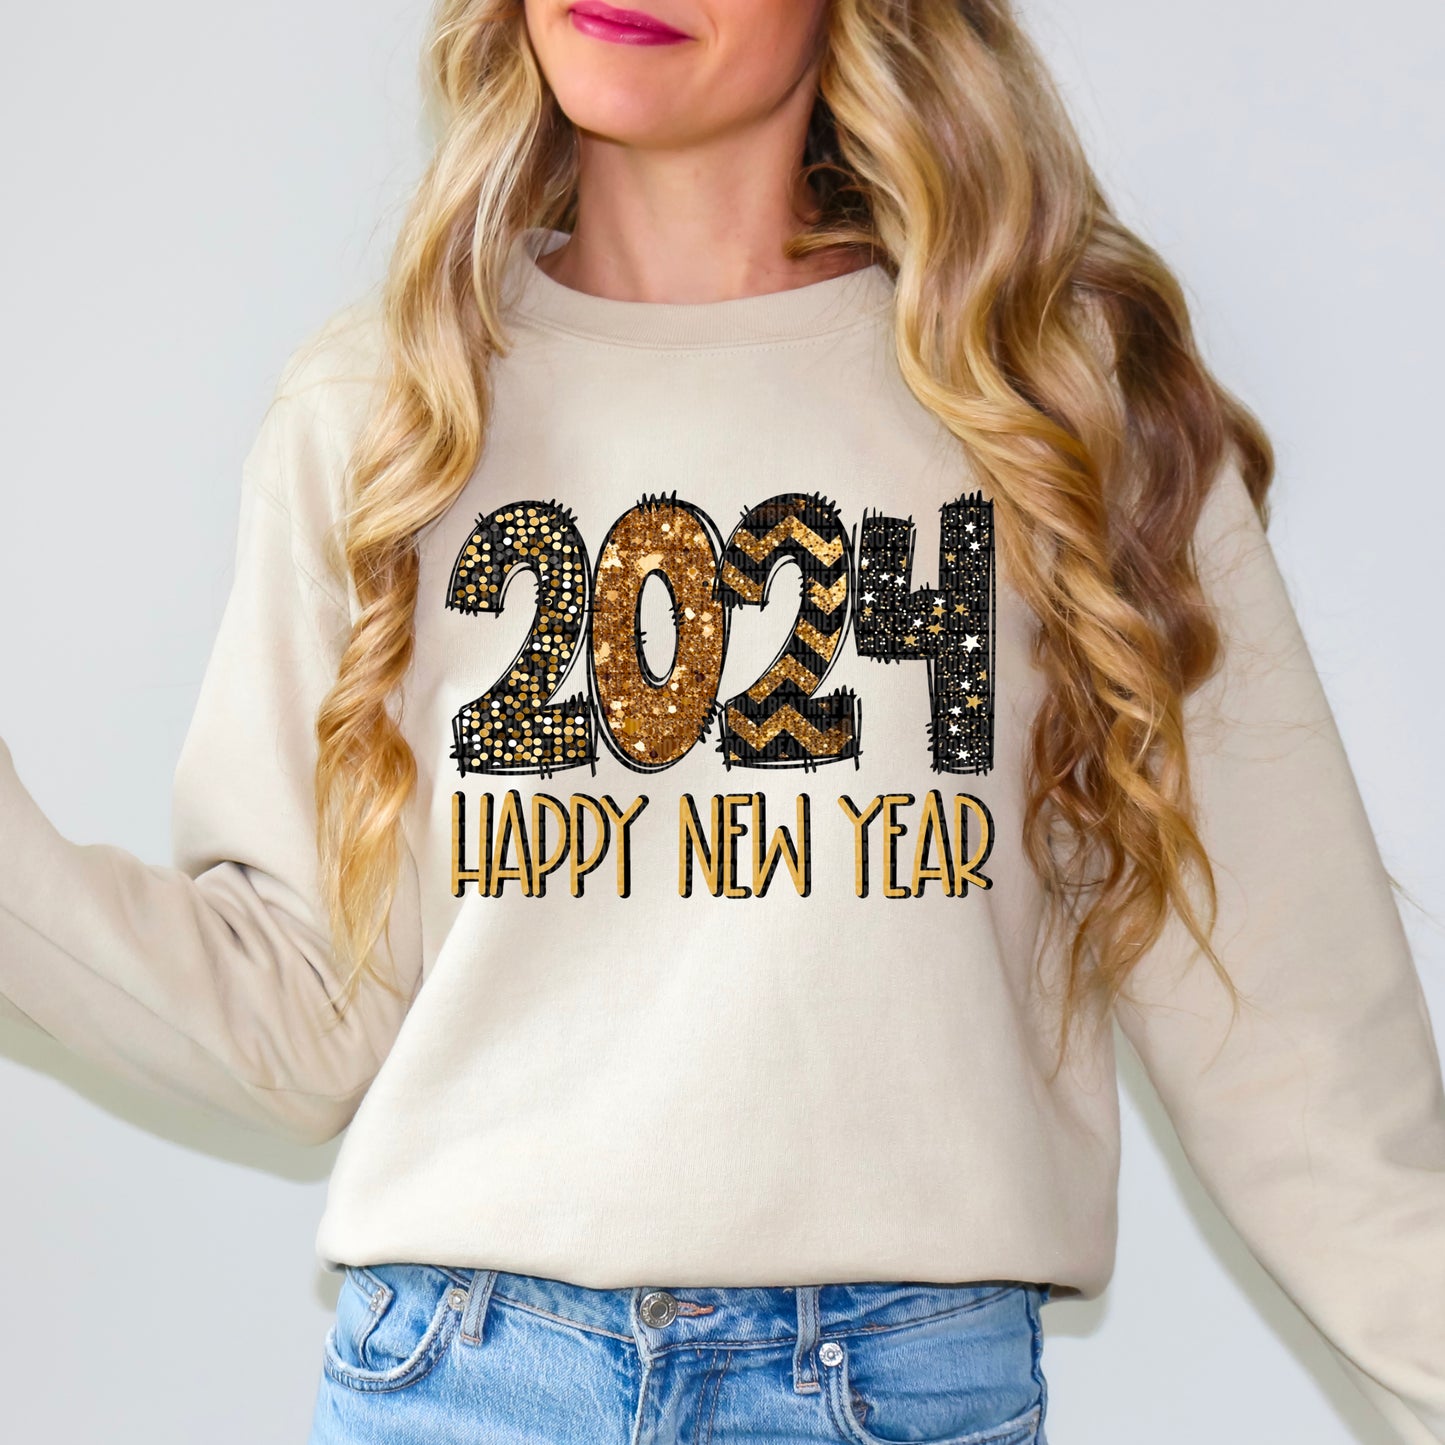 2024 Happy New Year